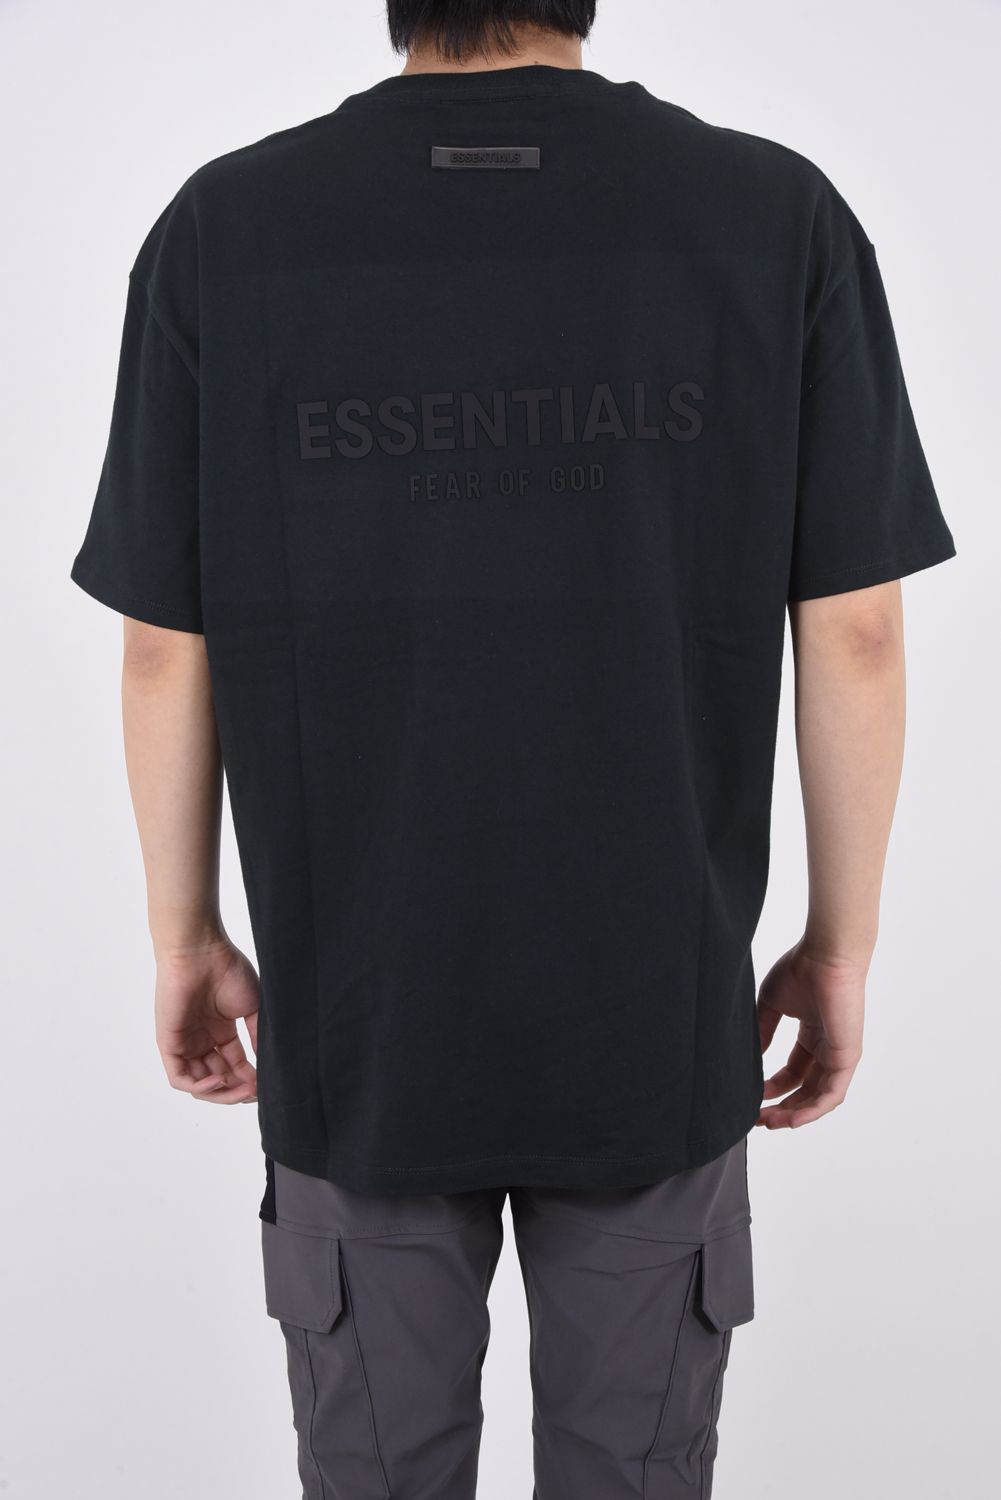 FOG ESSENTIALS - ESSENTIALS BACK LOGO T-Shirt / バック ロゴ 